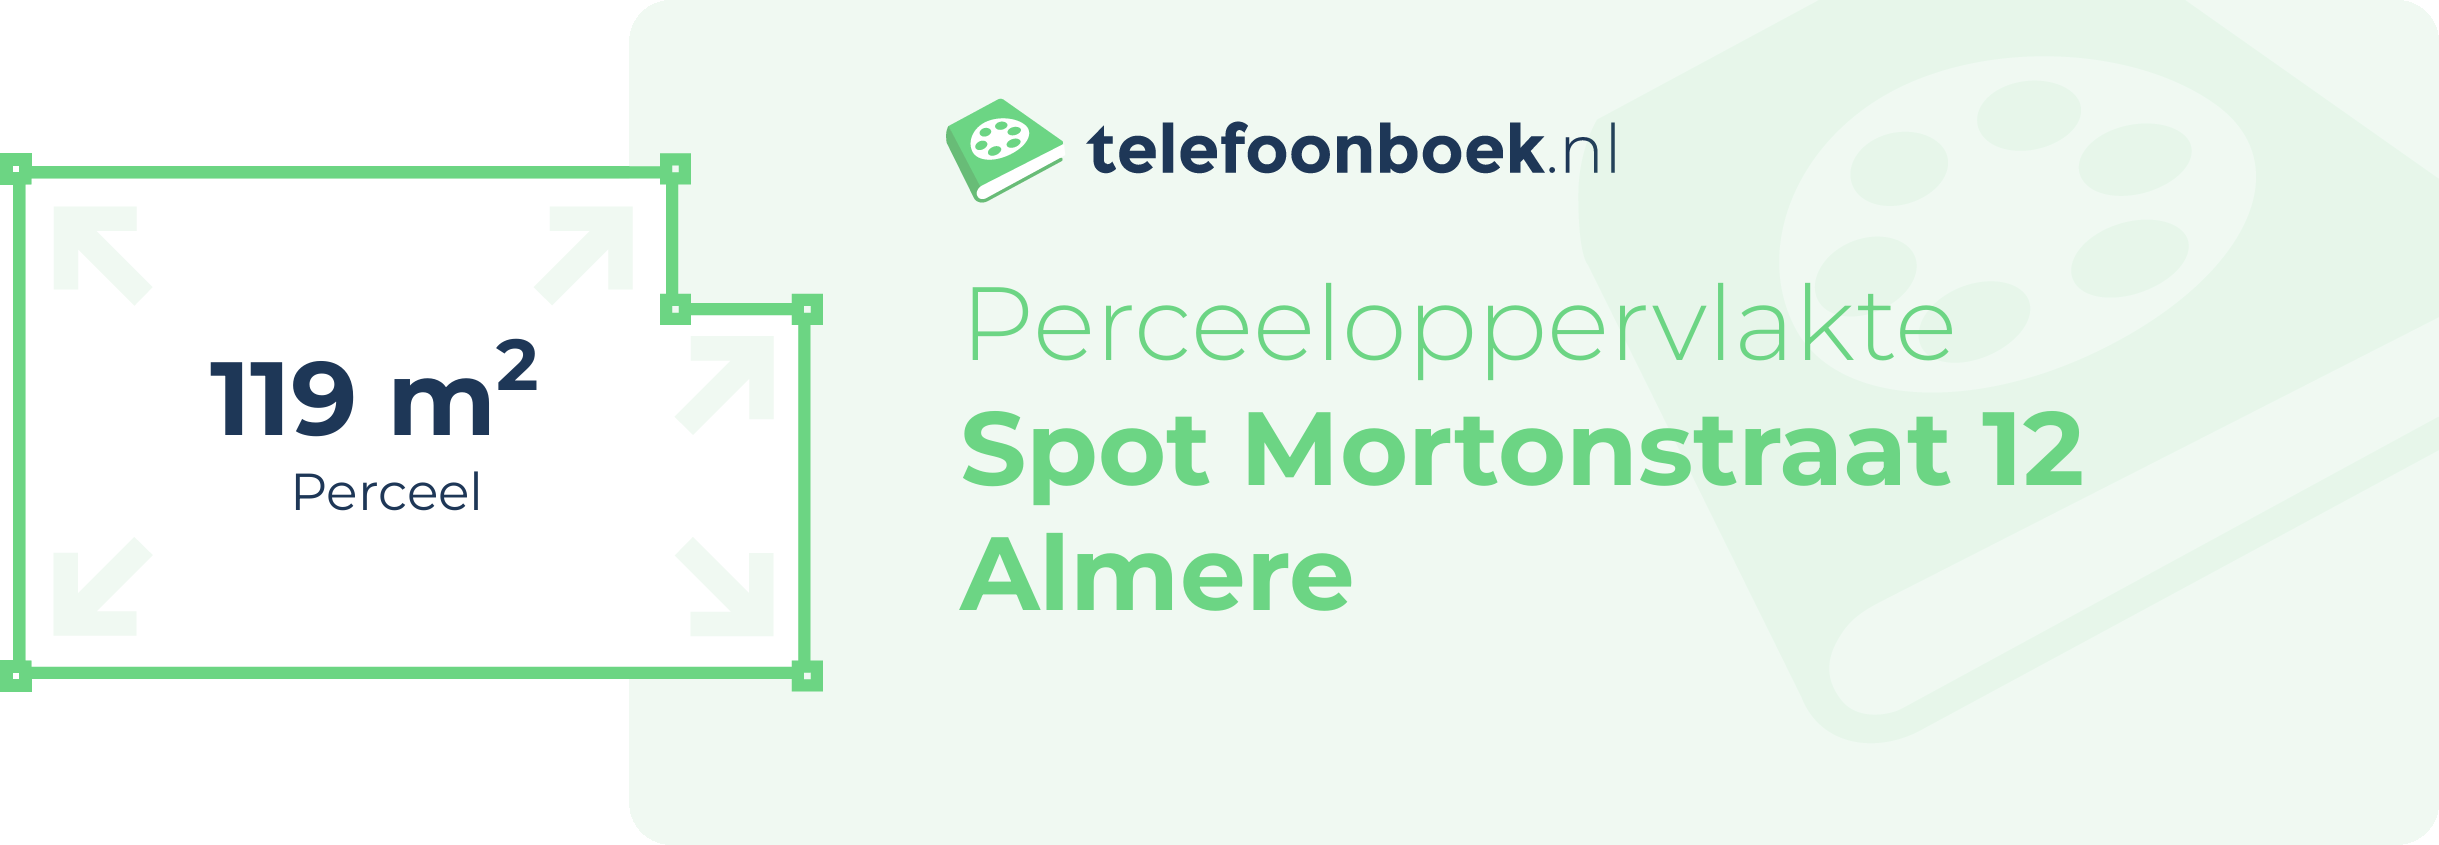 Perceeloppervlakte Spot Mortonstraat 12 Almere